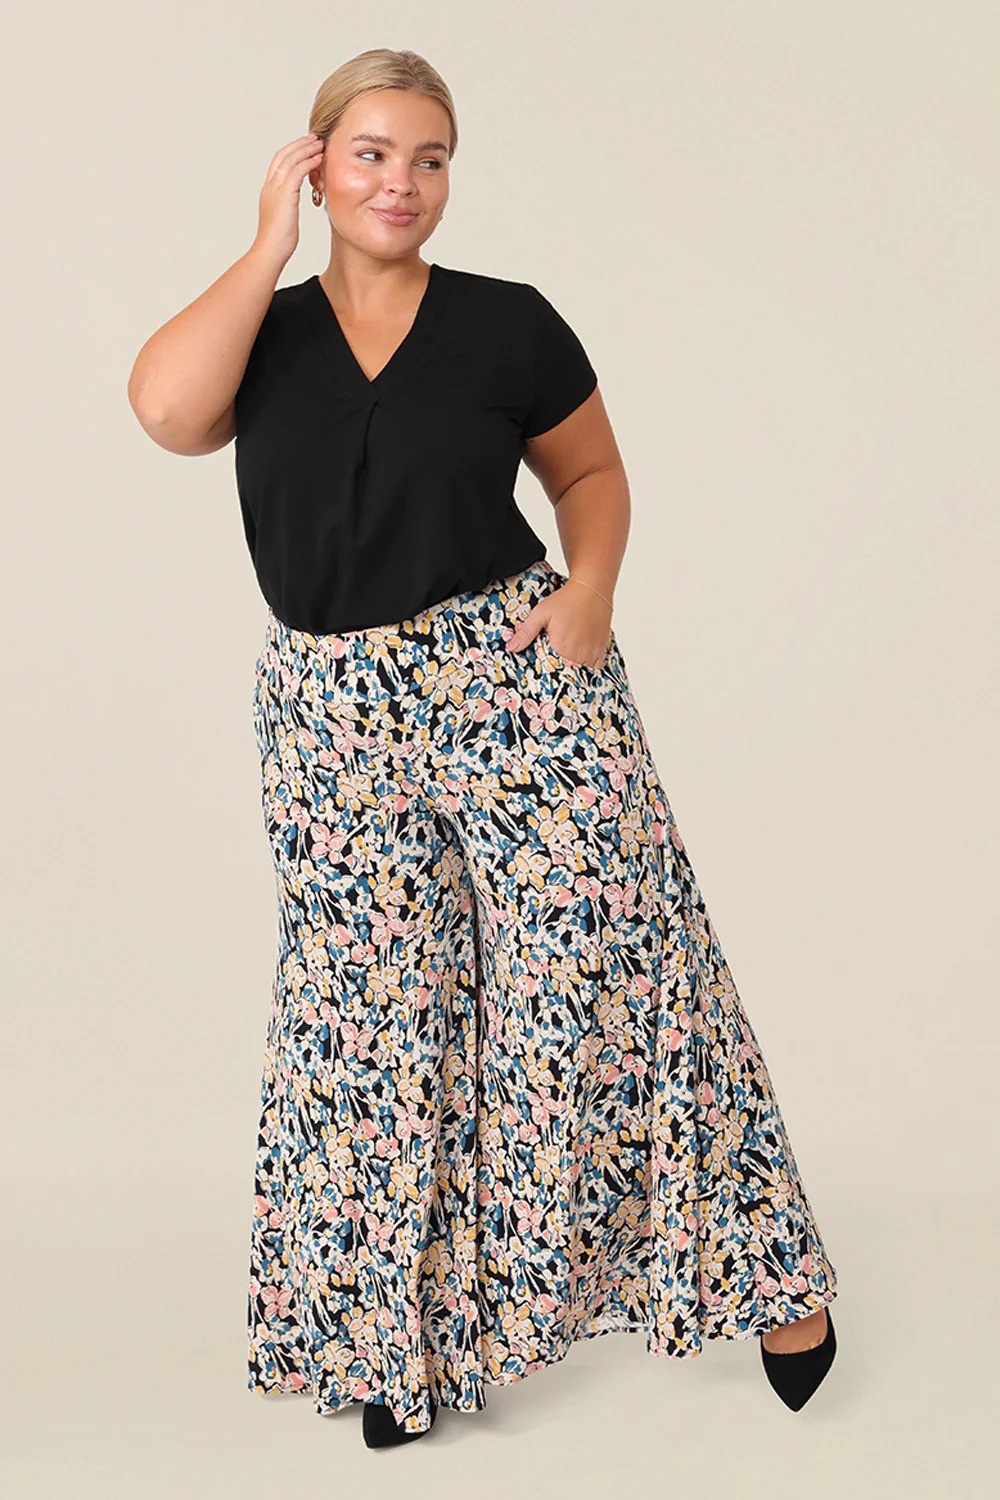 A woman wearing a wide-leg pant on a black top